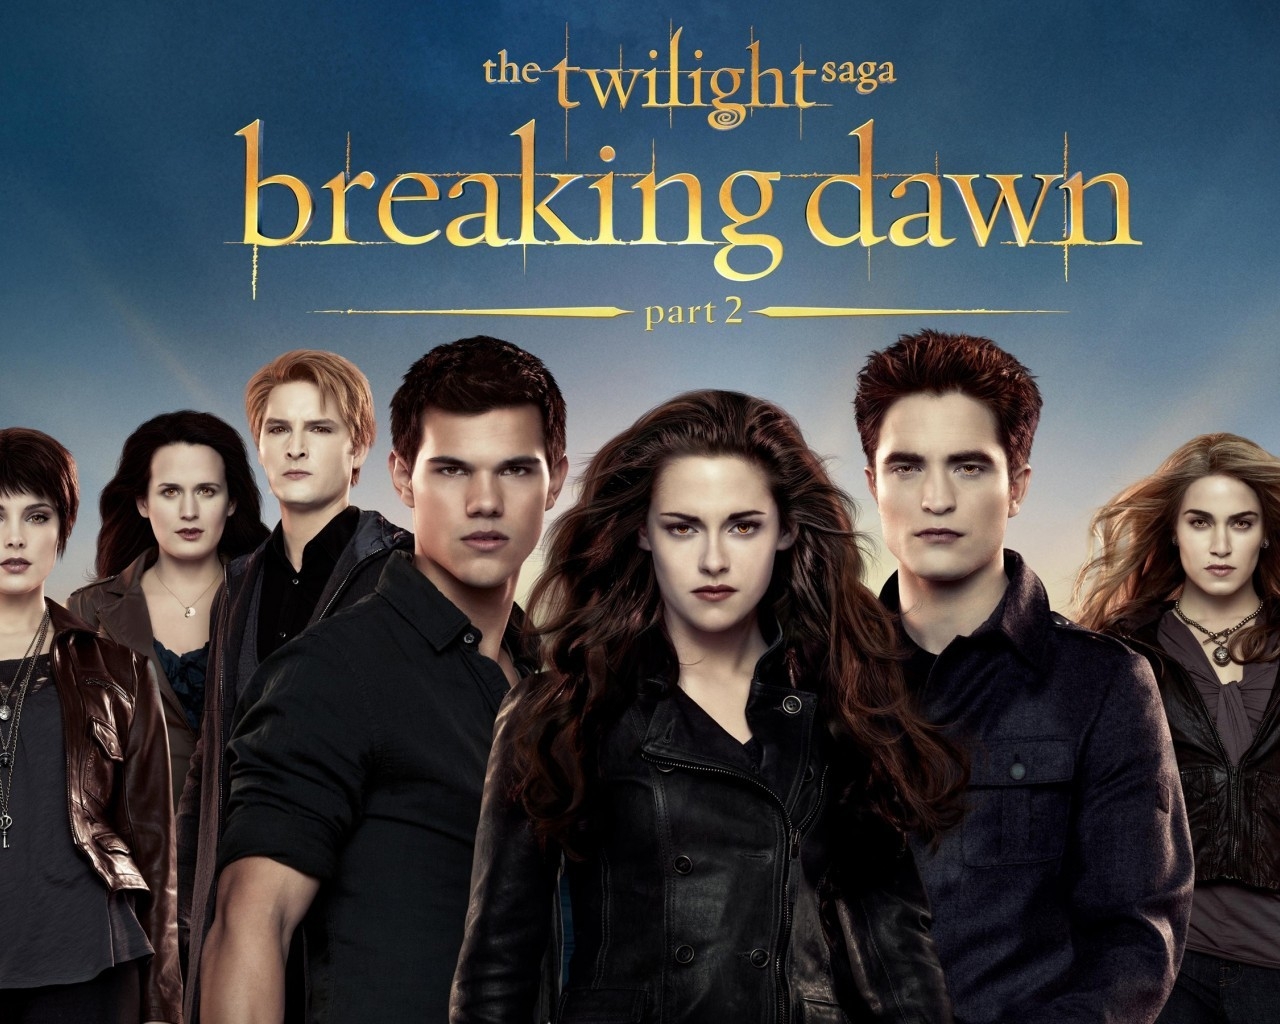 Twilight Saga Breaking Dawn Part 2 for 1280 x 1024 resolution